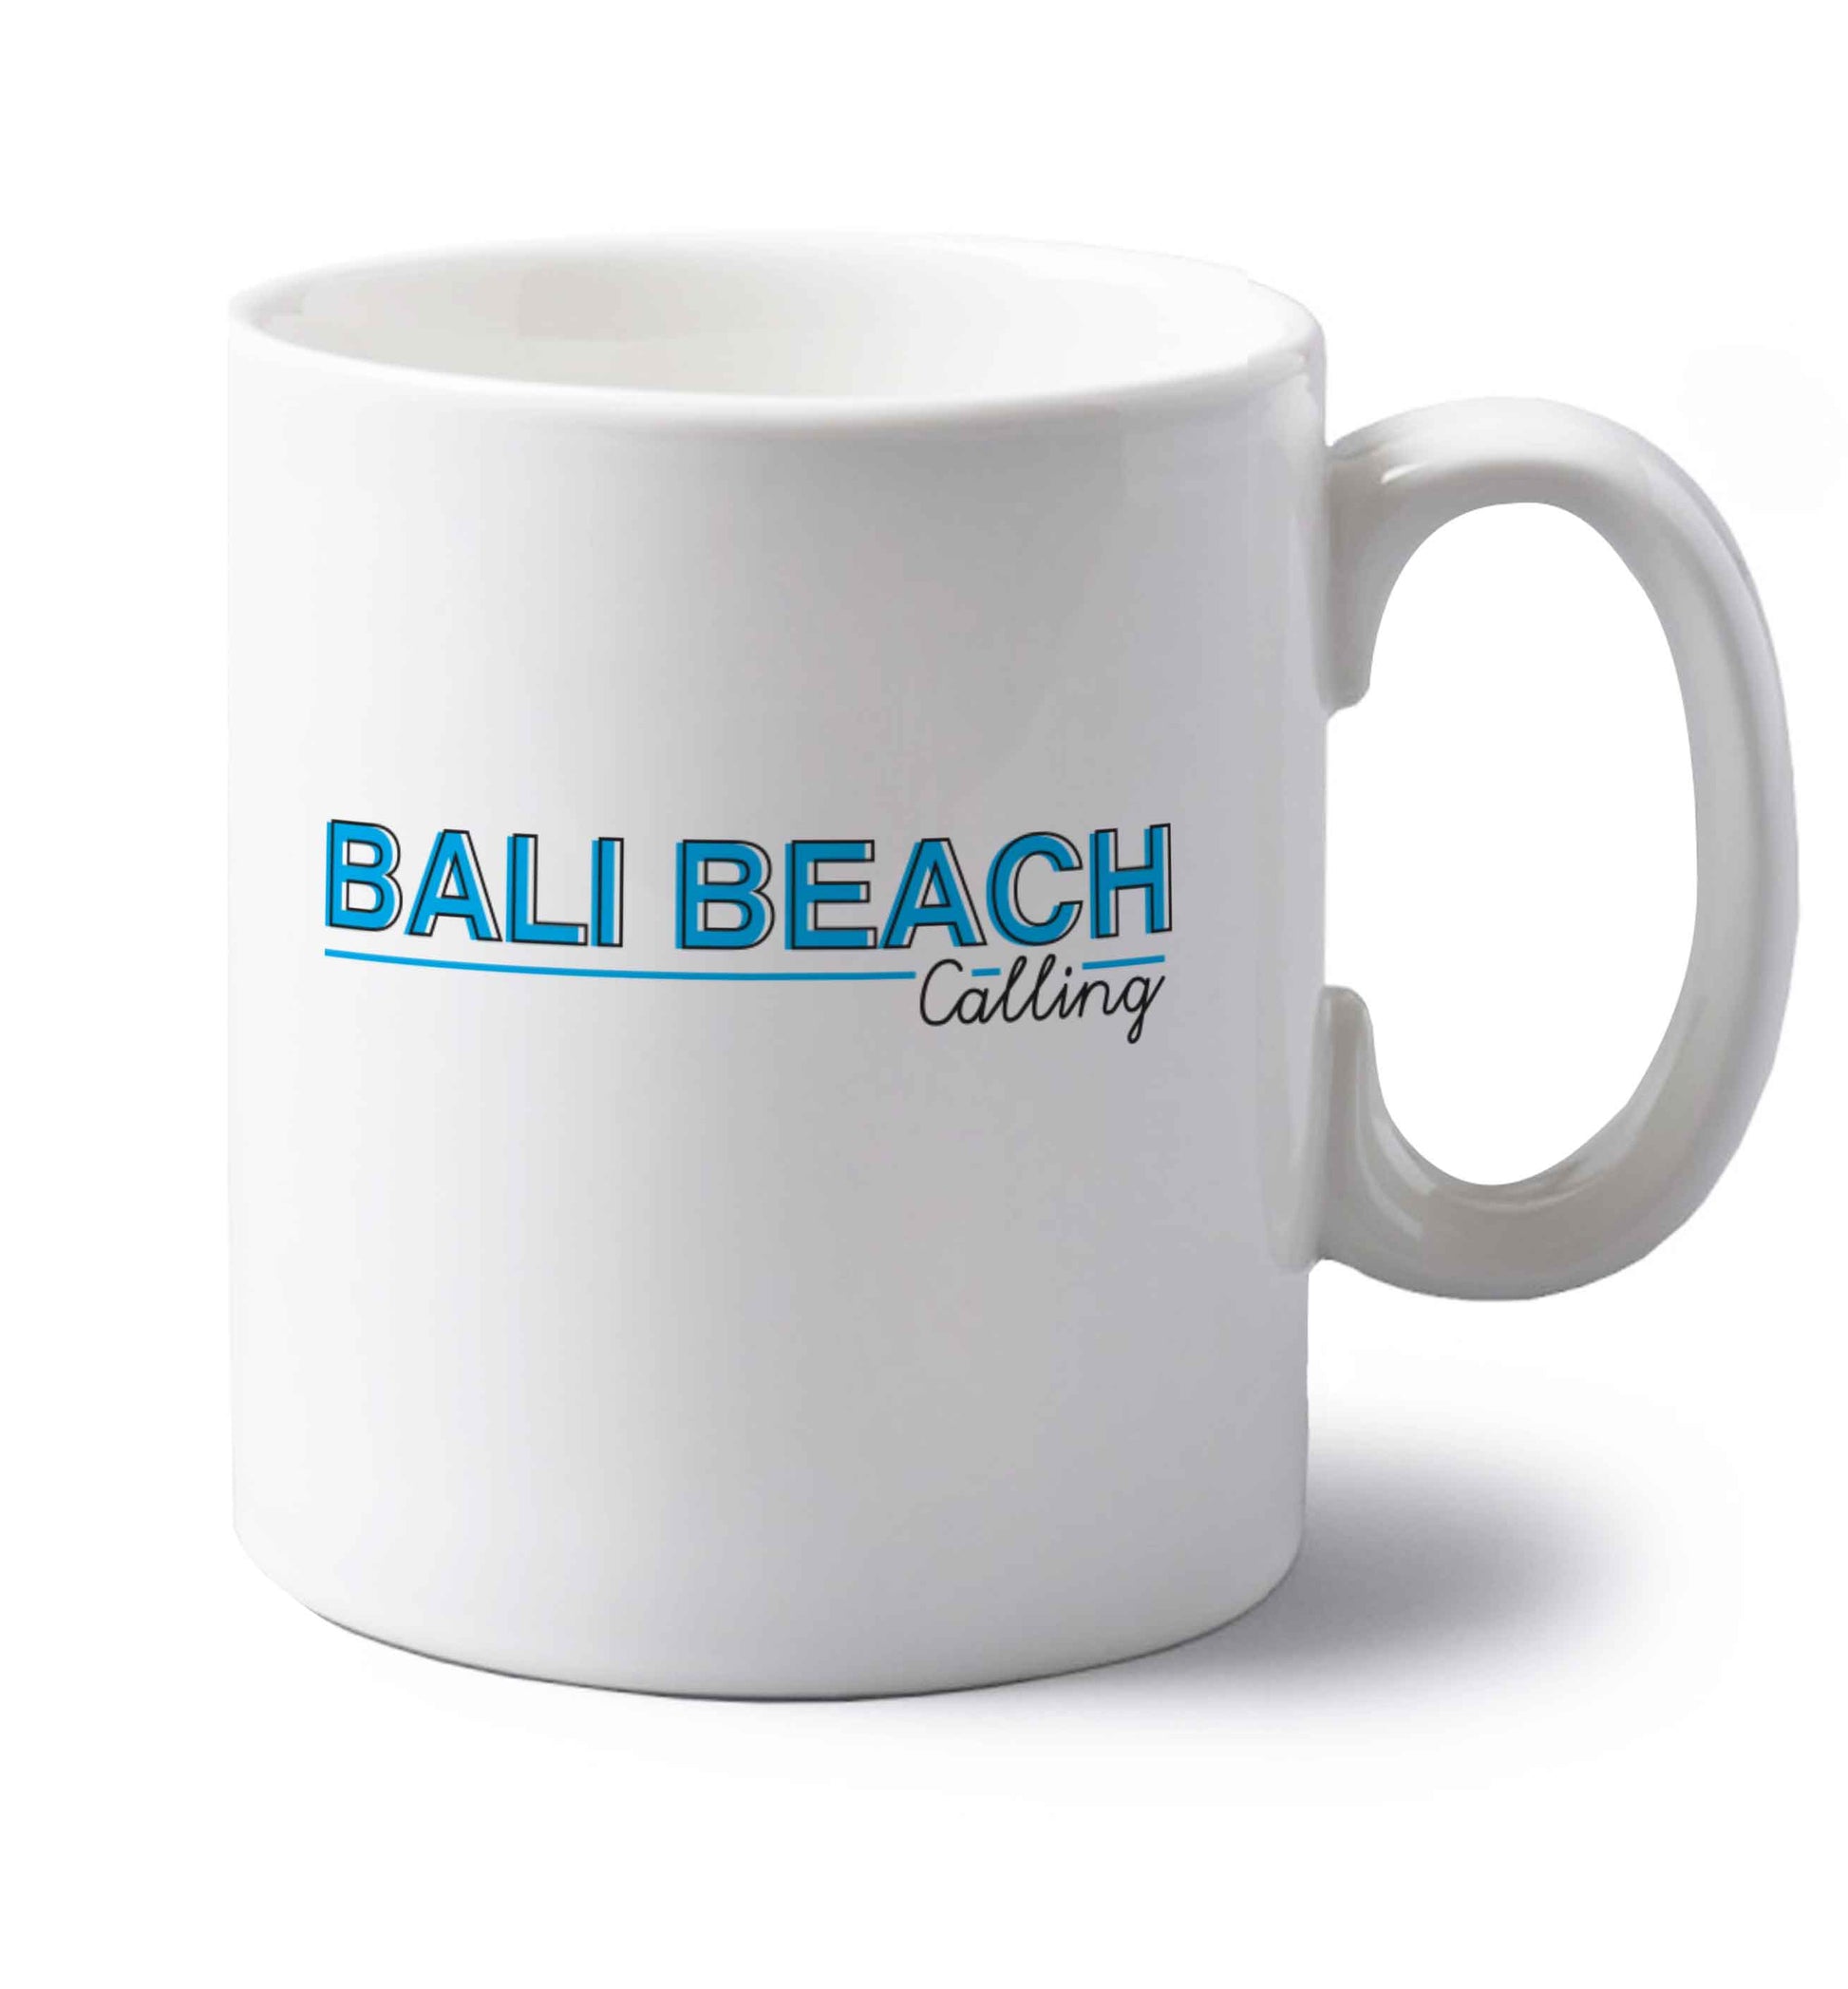 Bali beach calling left handed white ceramic mug 